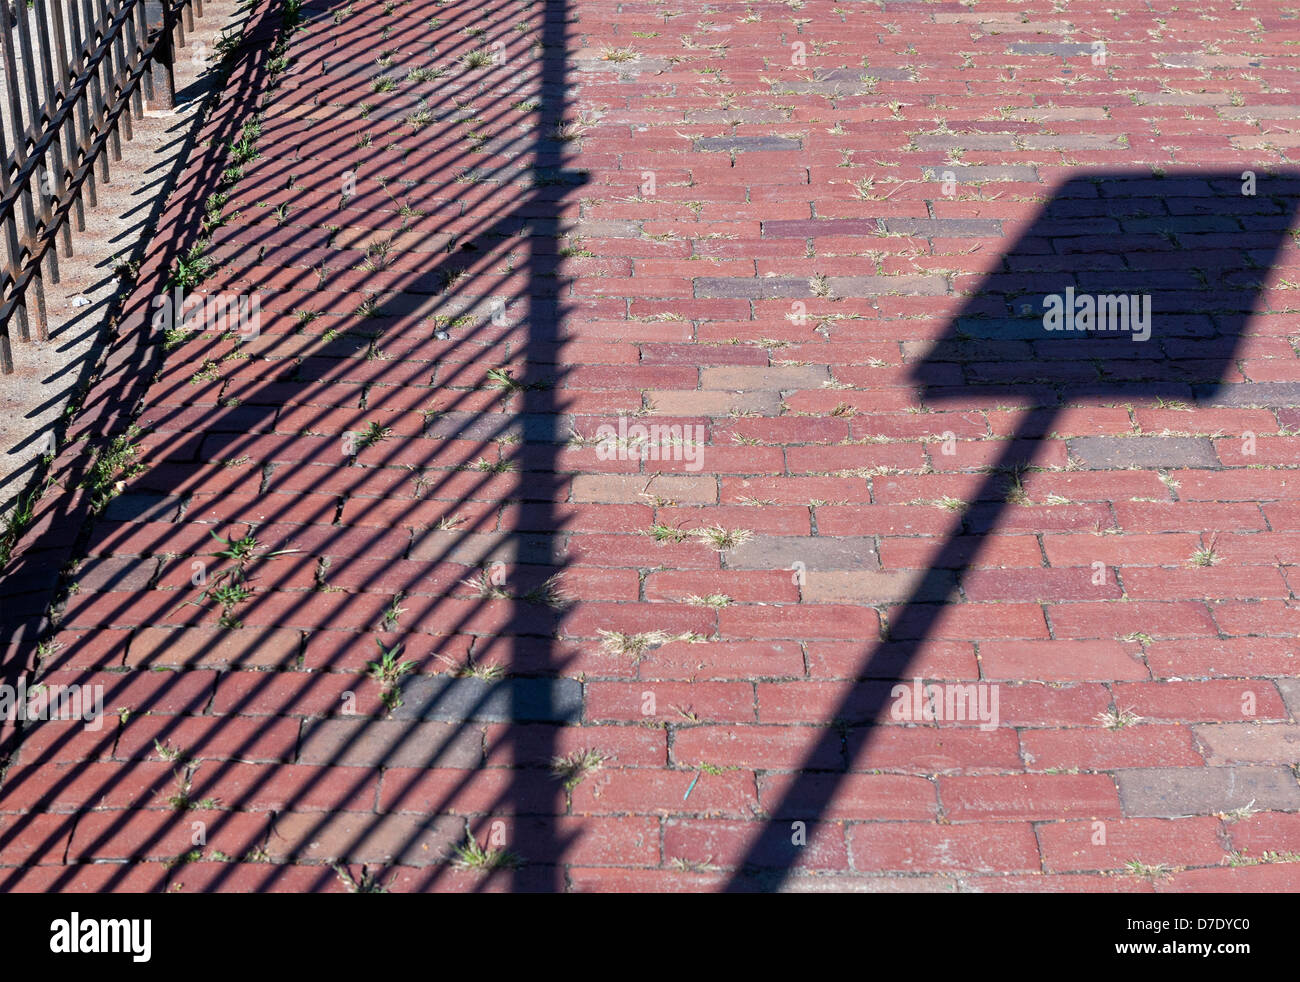 Sunlight creates interesting shadows on a brick walkway. Stock Photo